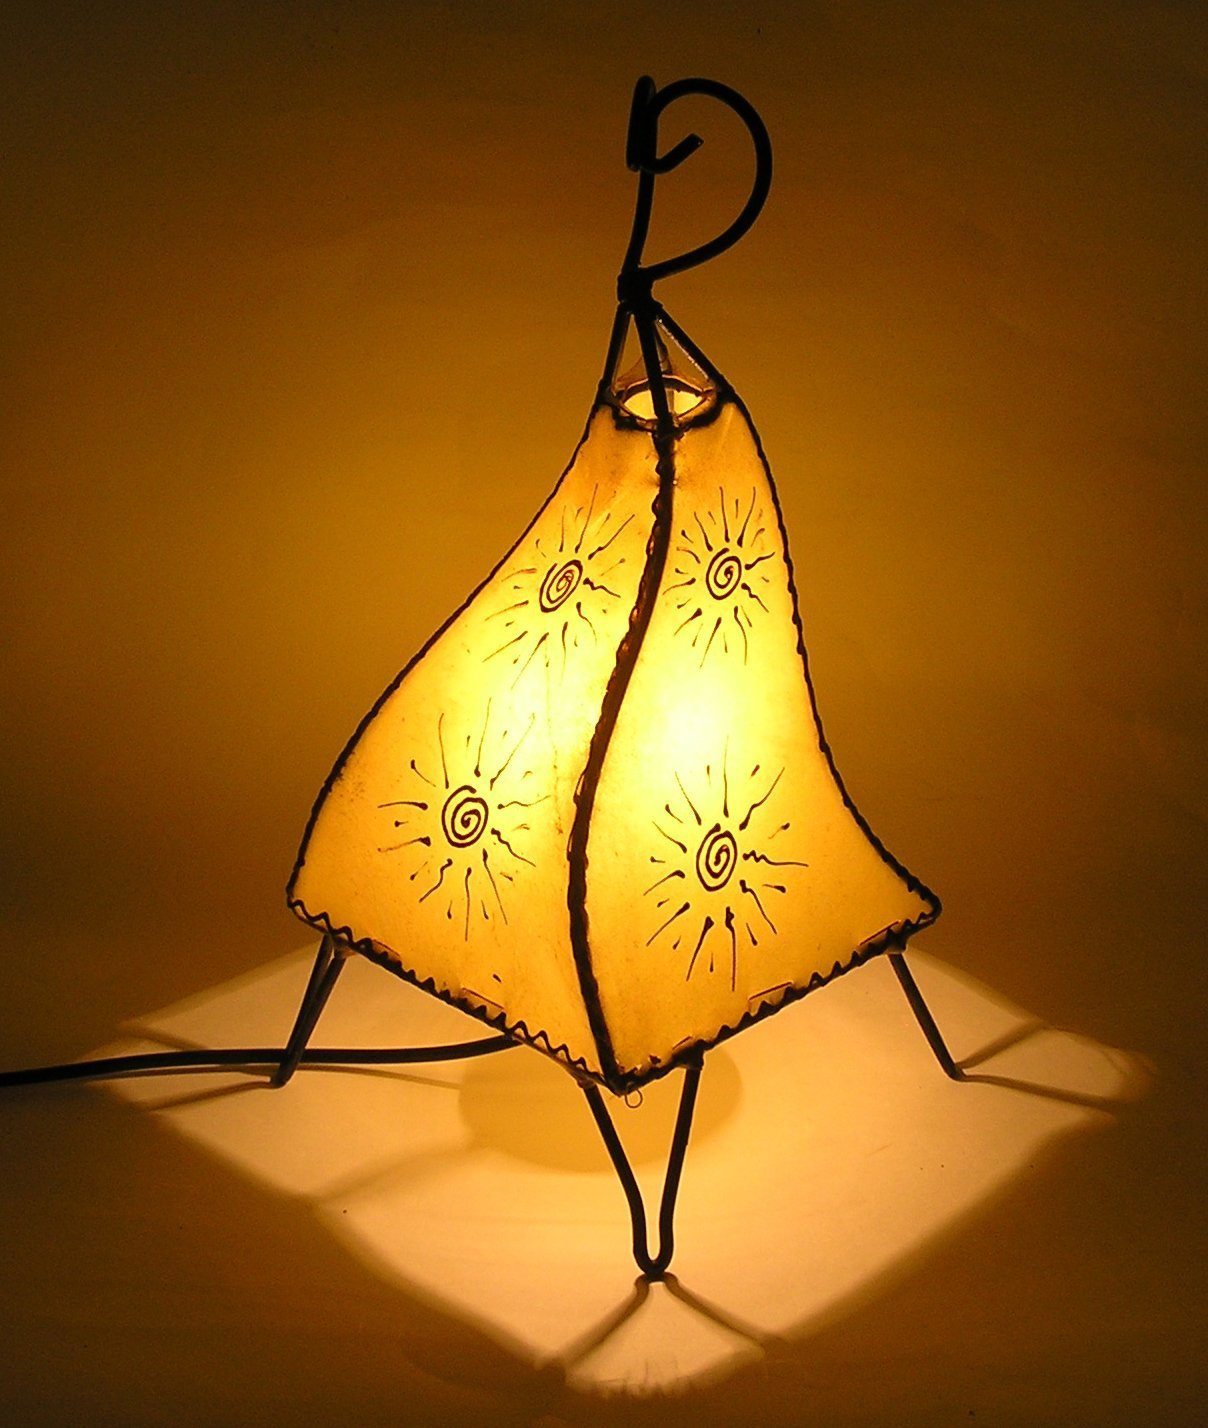 Orientalische Marokkanische Stehlampe Leder Lampe Hennalampe Lederleuchte Mellah